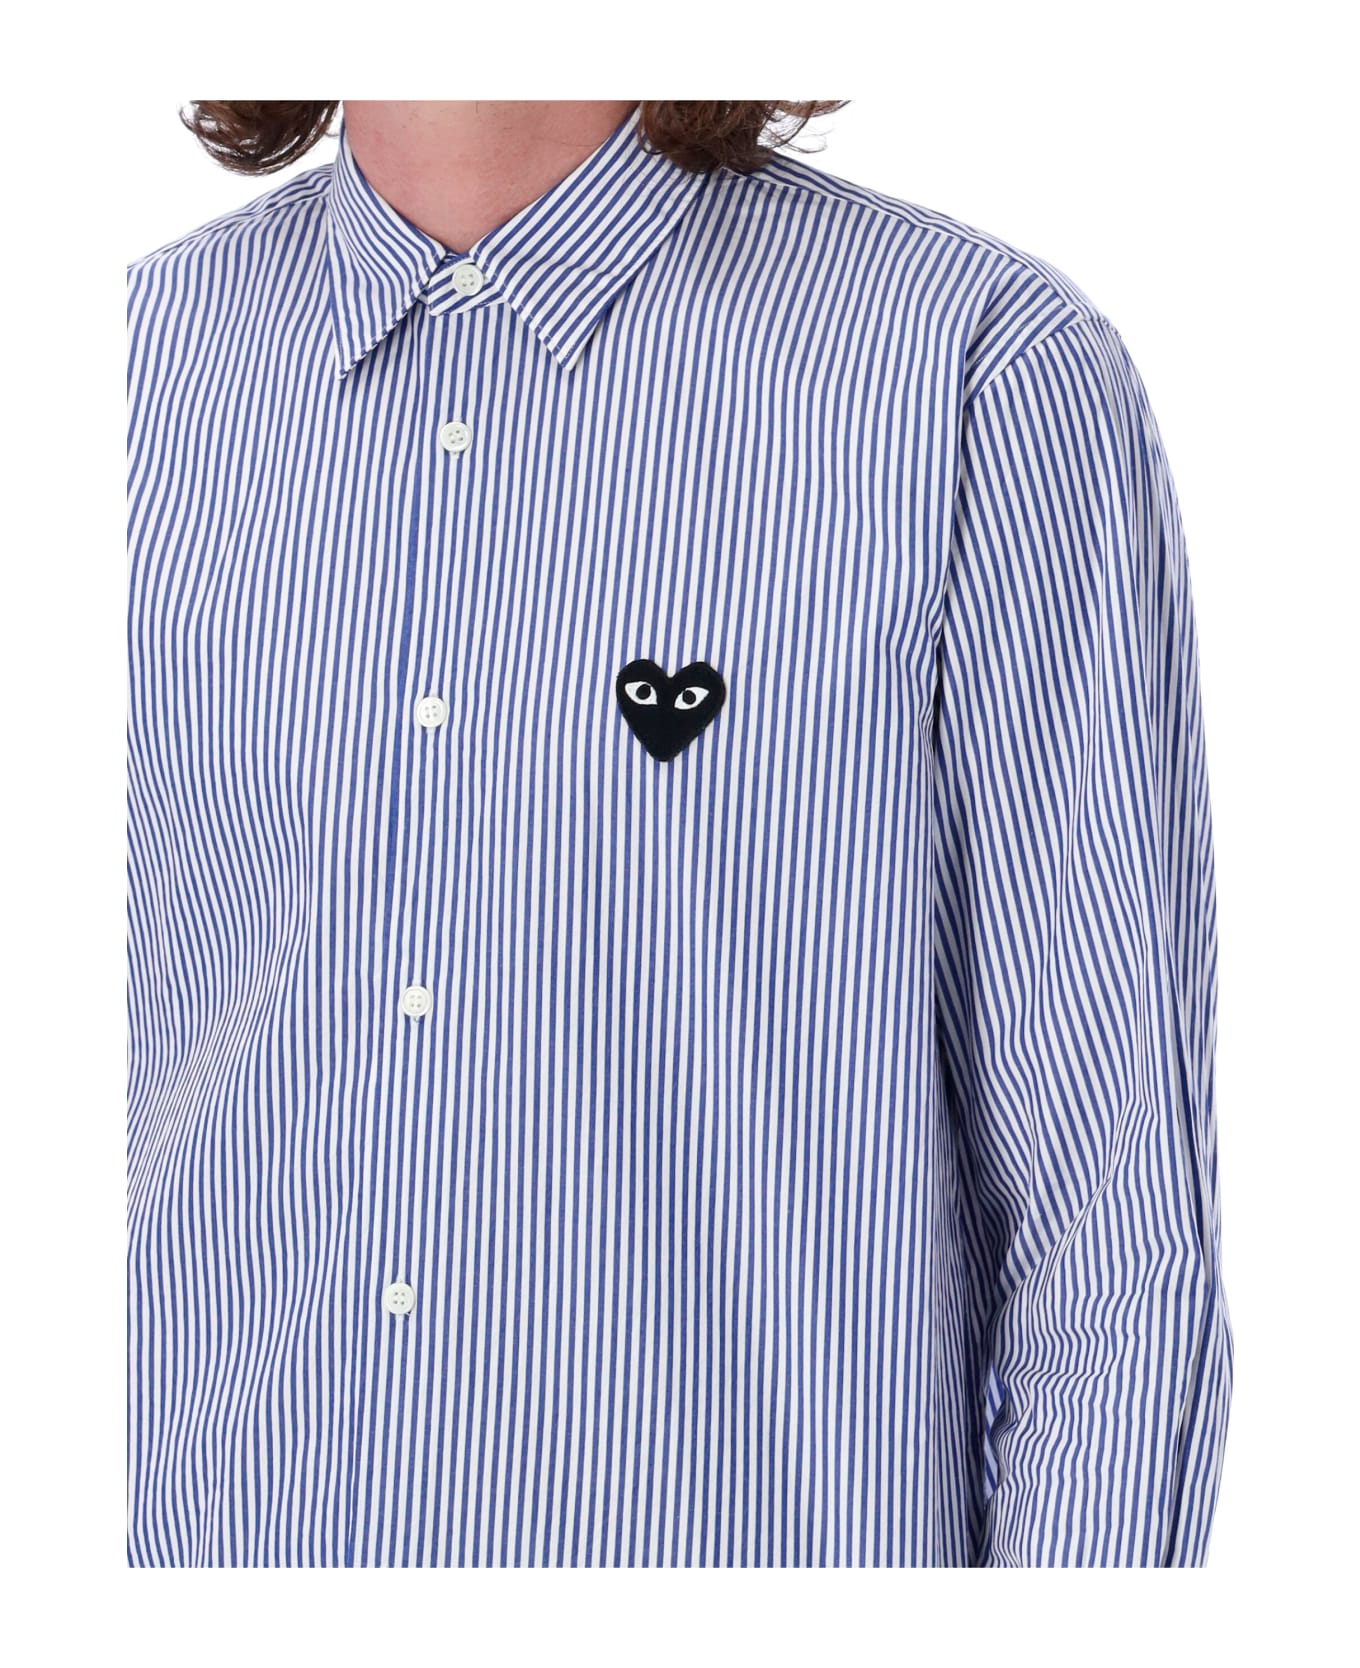 Comme des Garçons Play Striped Shirt With Black Heart Patch - BLUE